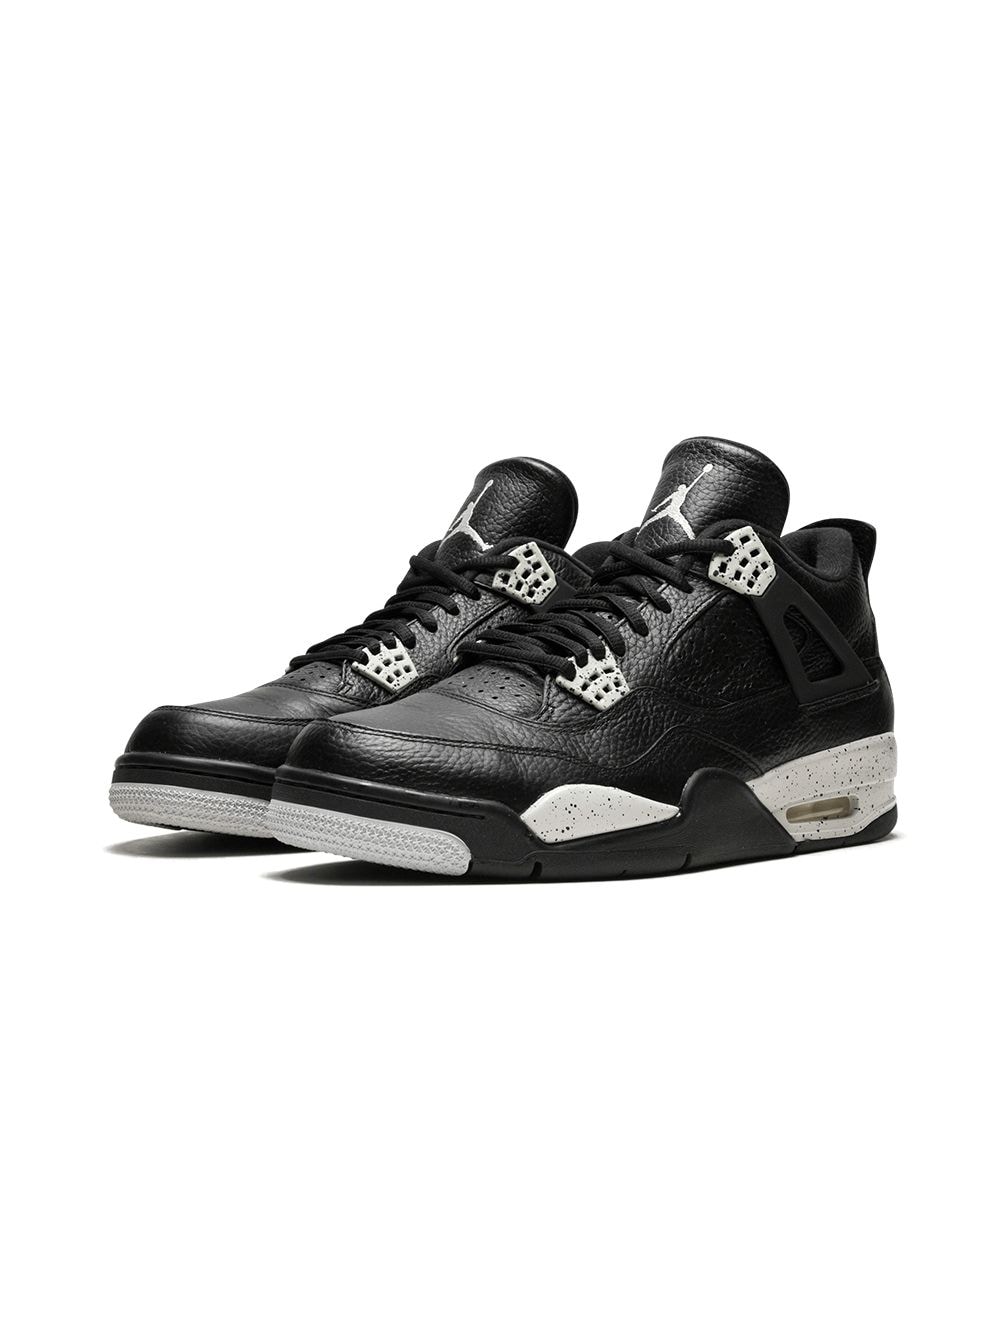 Shop black Jordan Air Jordan 4 Retro LS 